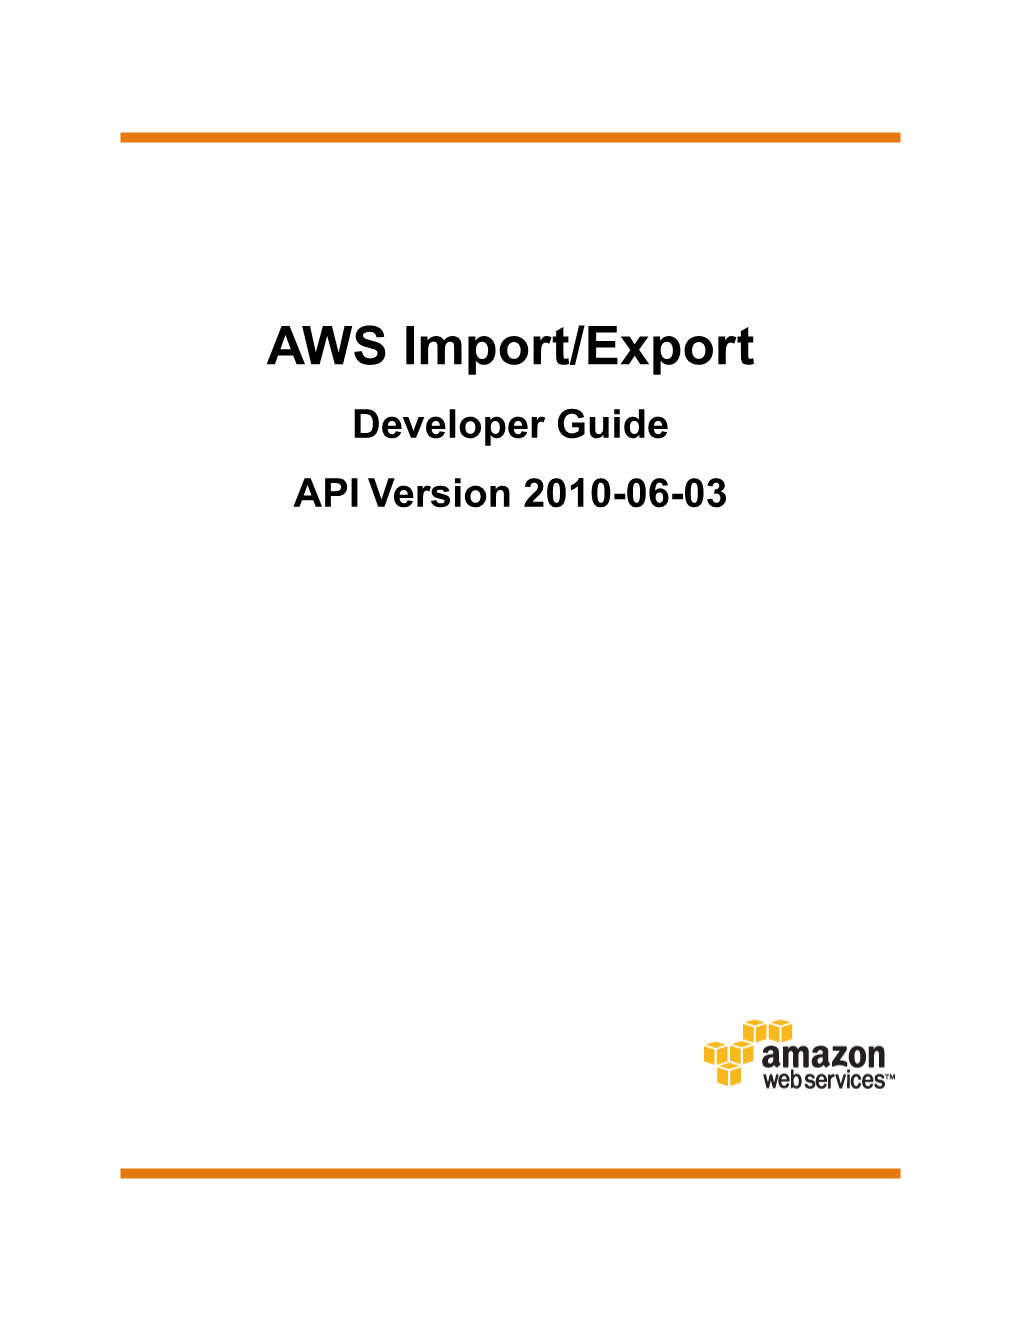 AWS Import/Export Developer Guide API Version 2010-06-03 AWS Import/Export Developer Guide